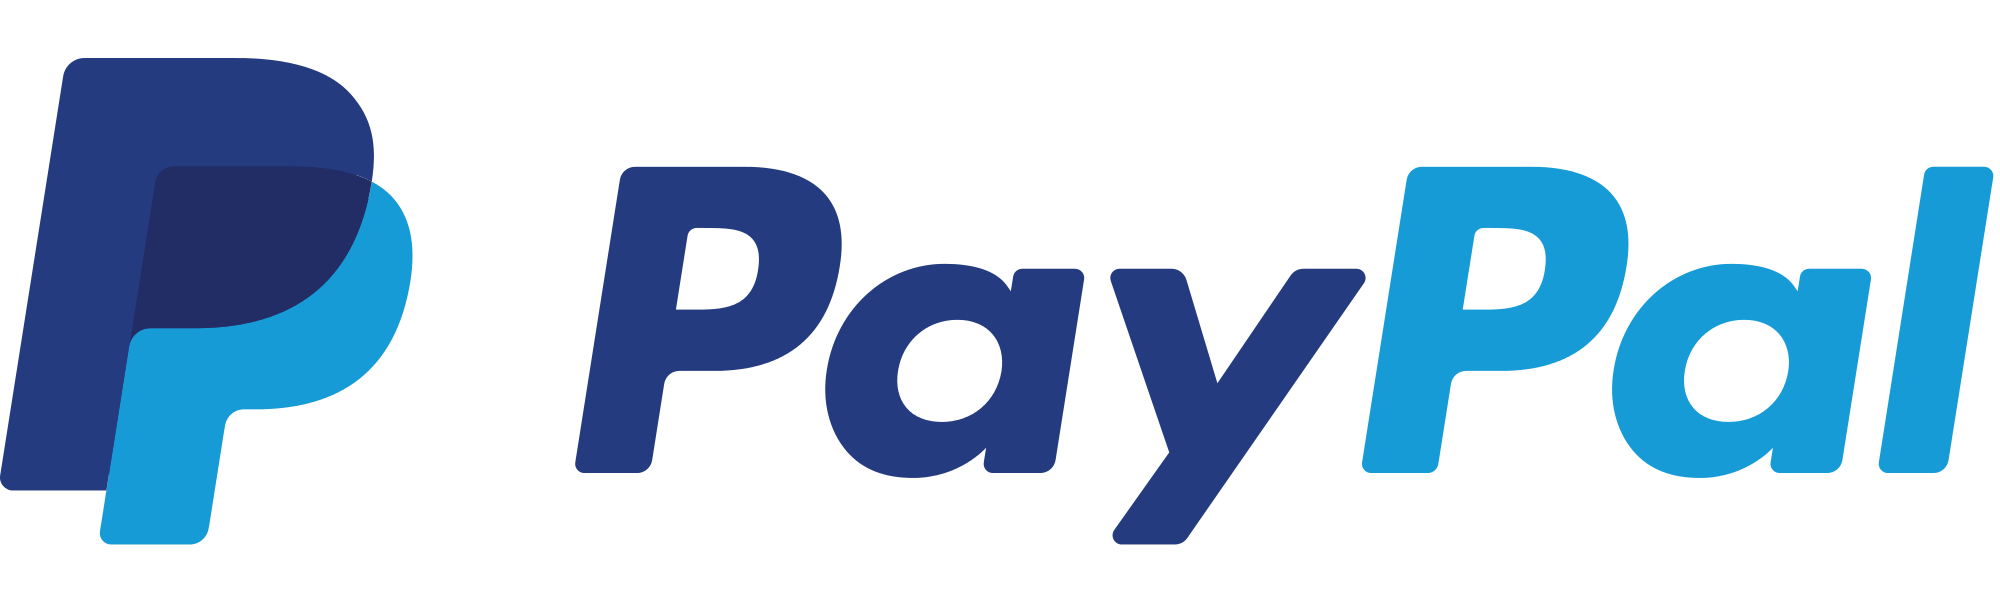 Best payment gateway - paybal